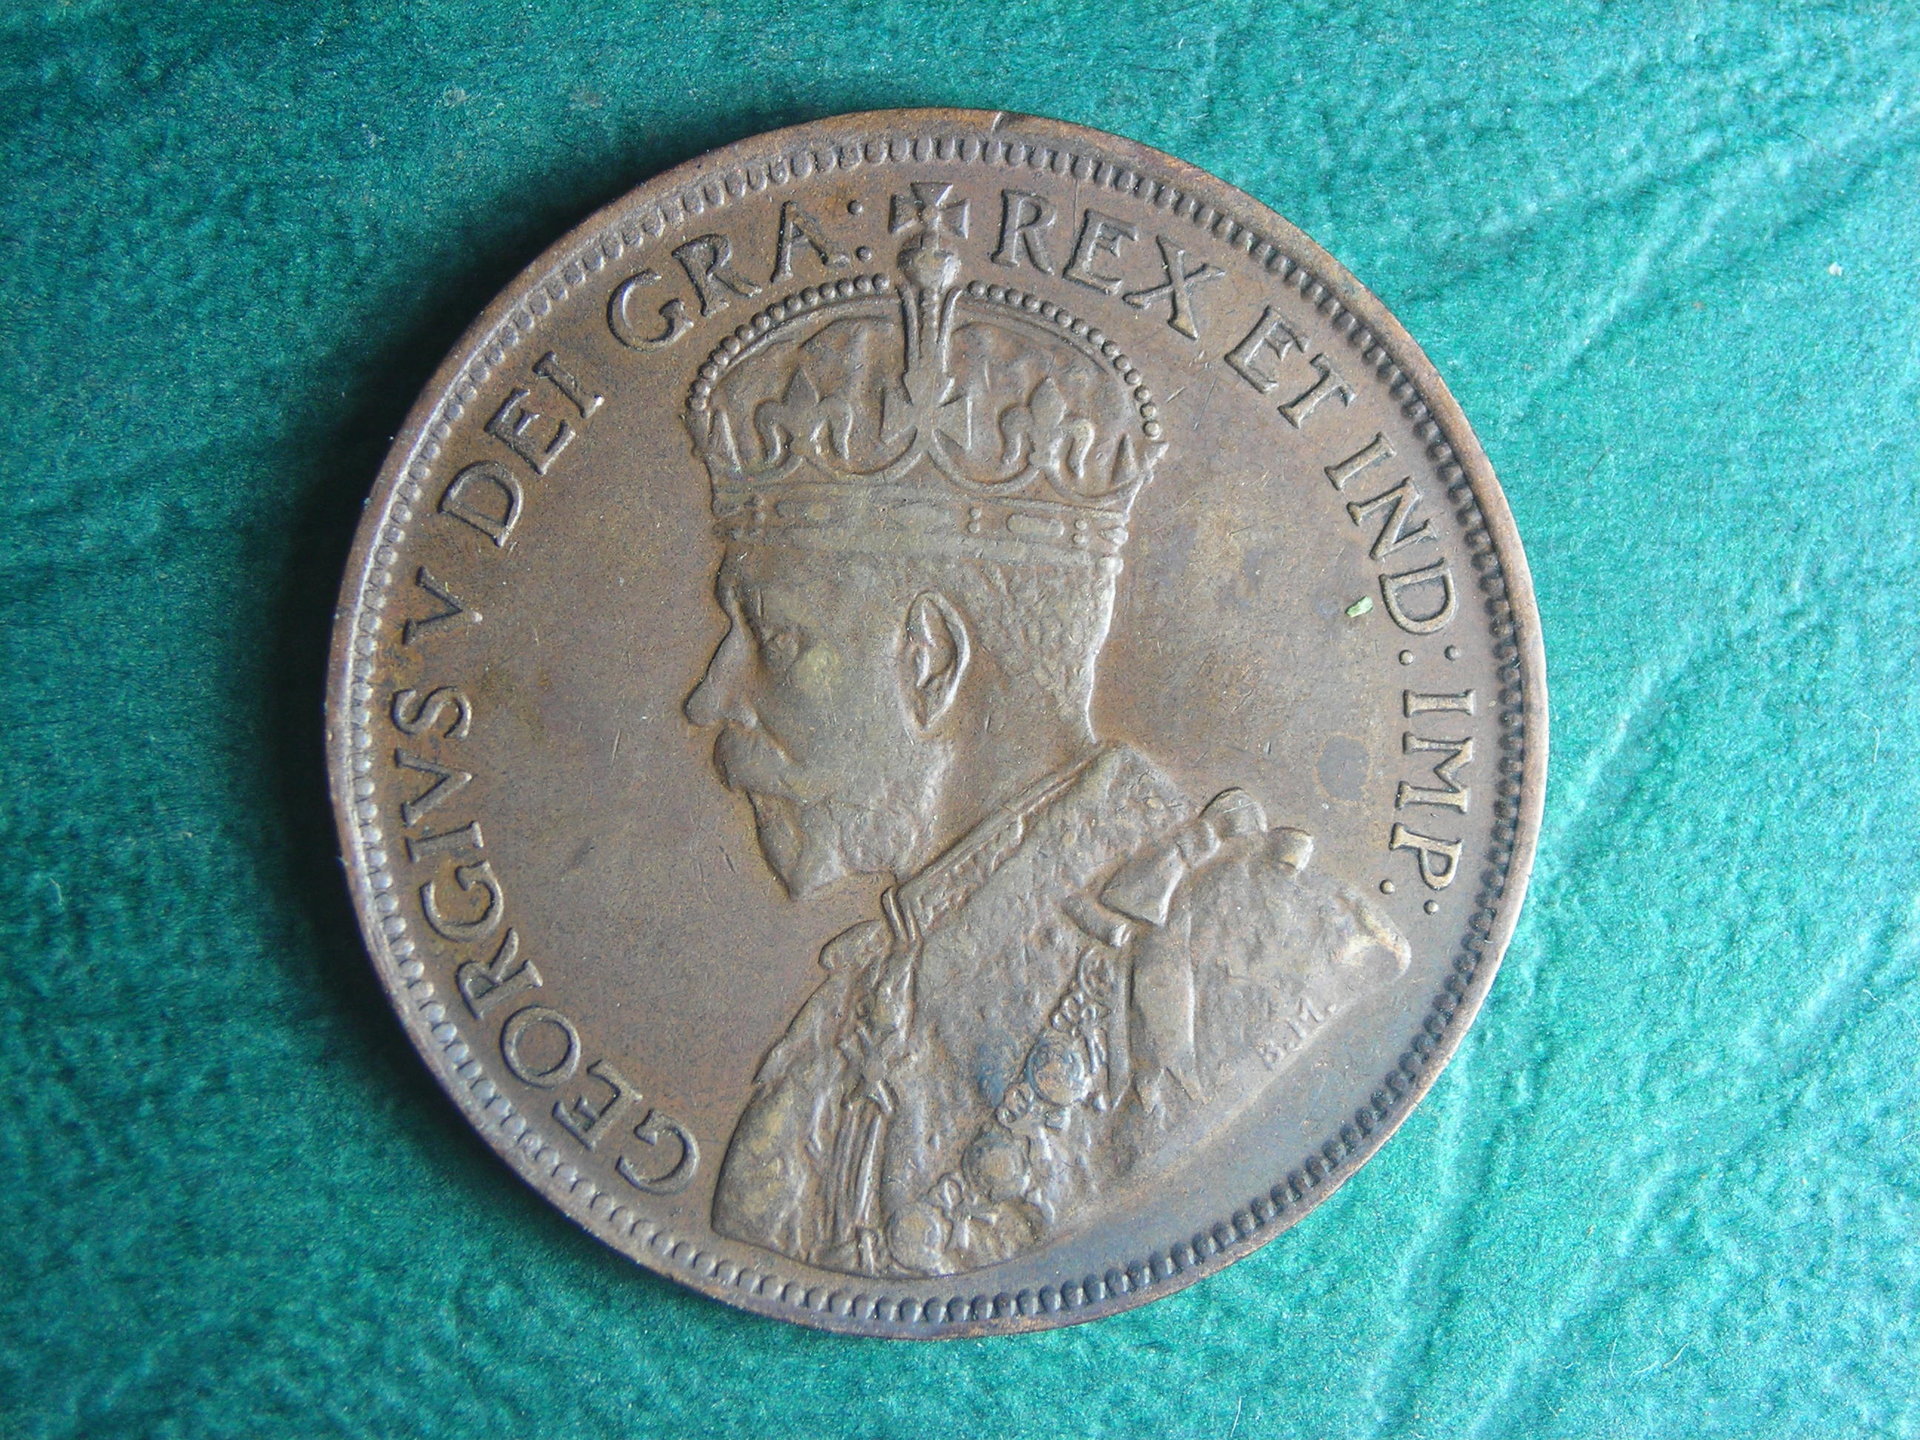 1917 Canada 1 c obv.JPG